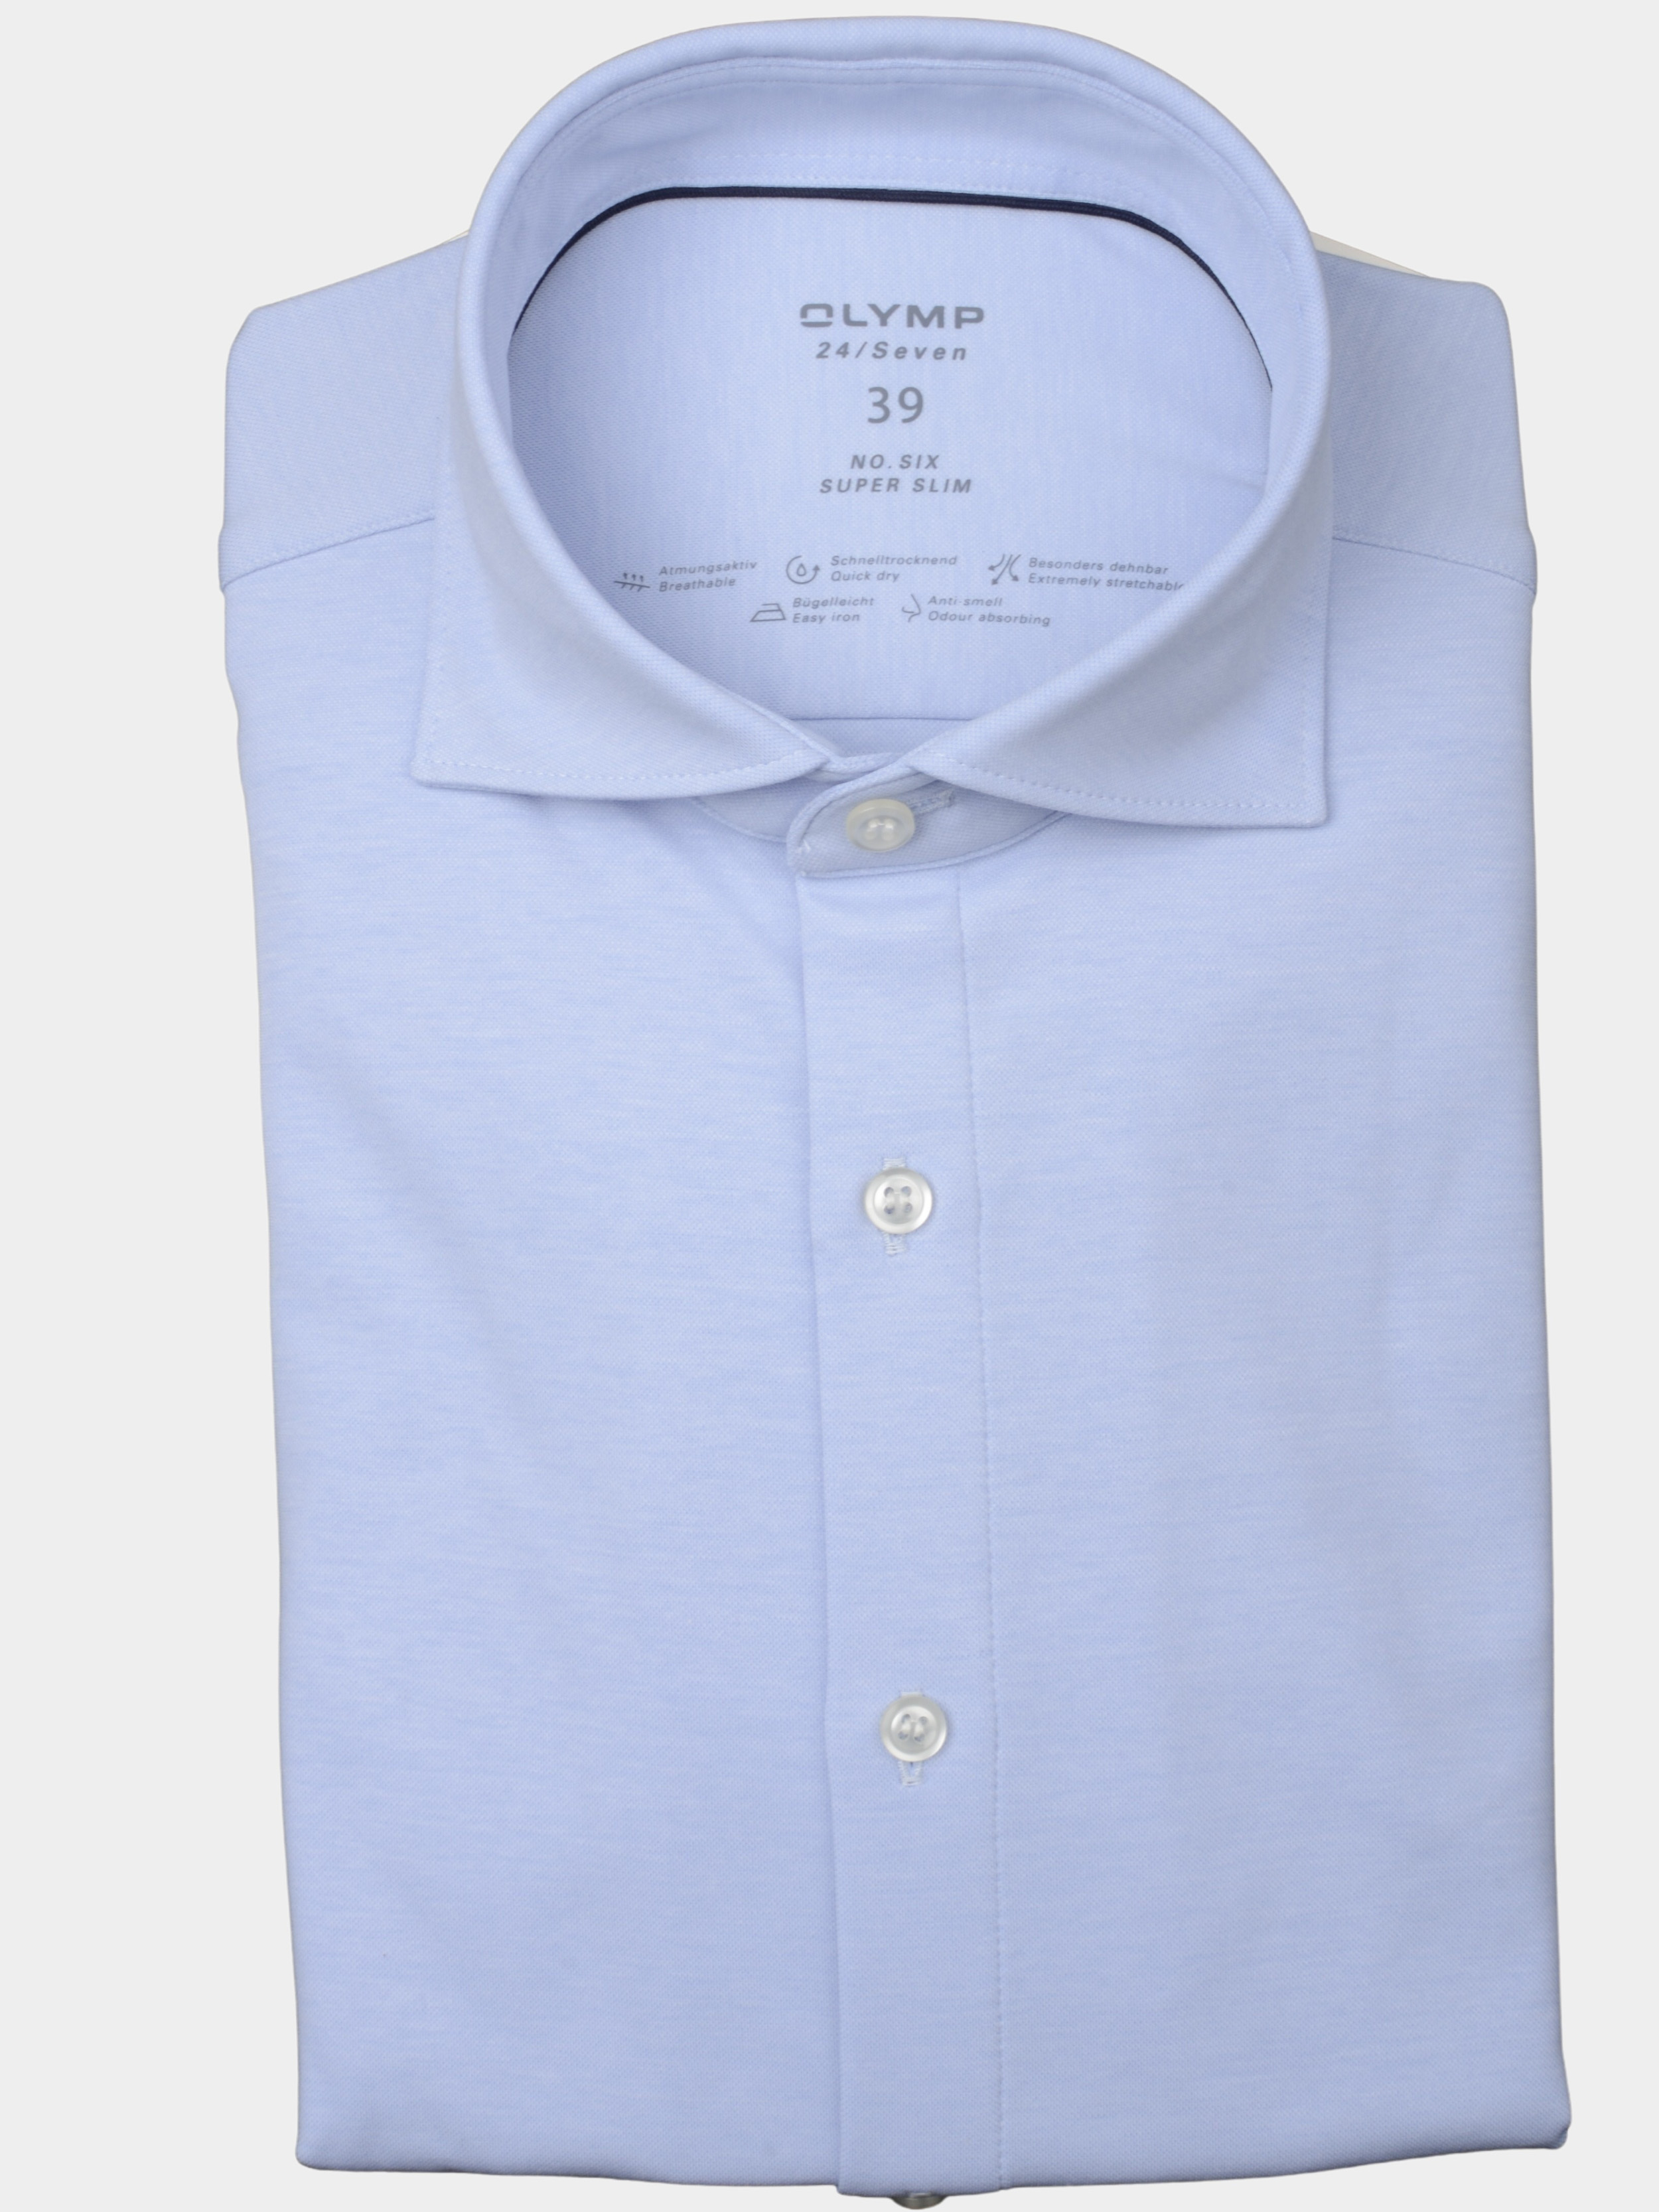 22% Olymp Business Hemd Lange Mouw Blauw Slim Fit Jersey Shirt 250284/11 Bos Men Shop